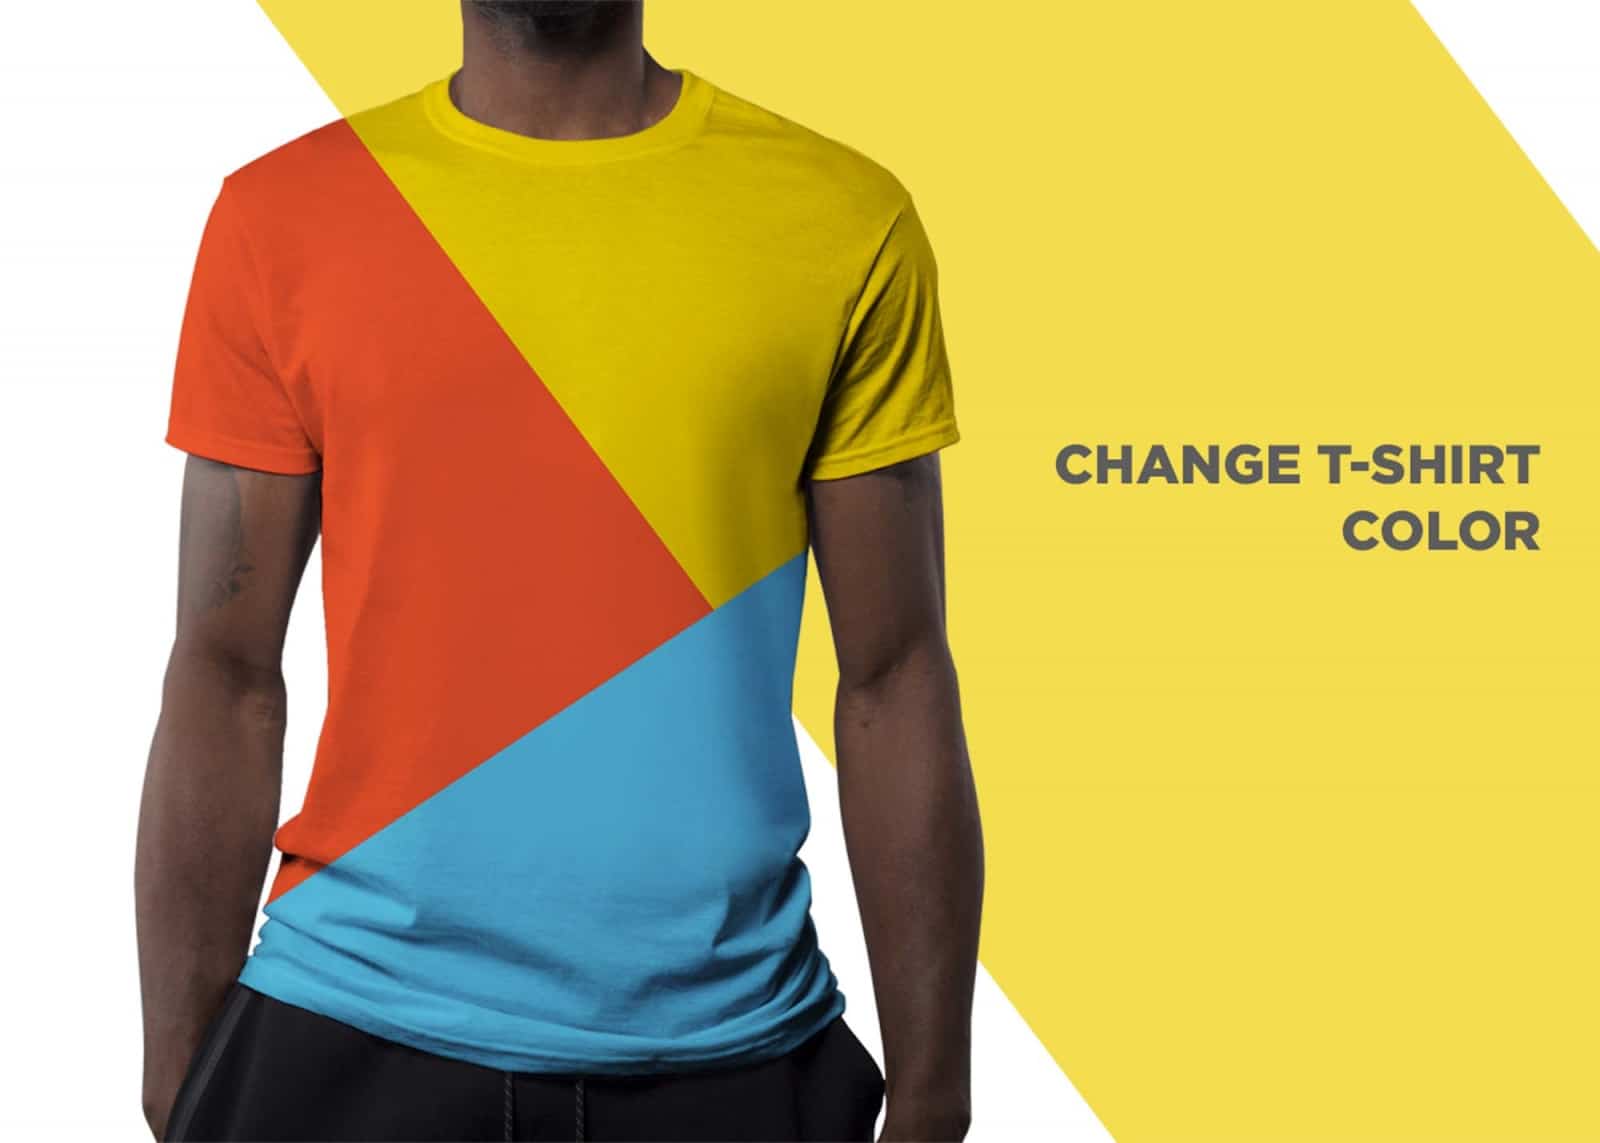 T-shirt Mockup in PSD Download For Free | DesignHooks